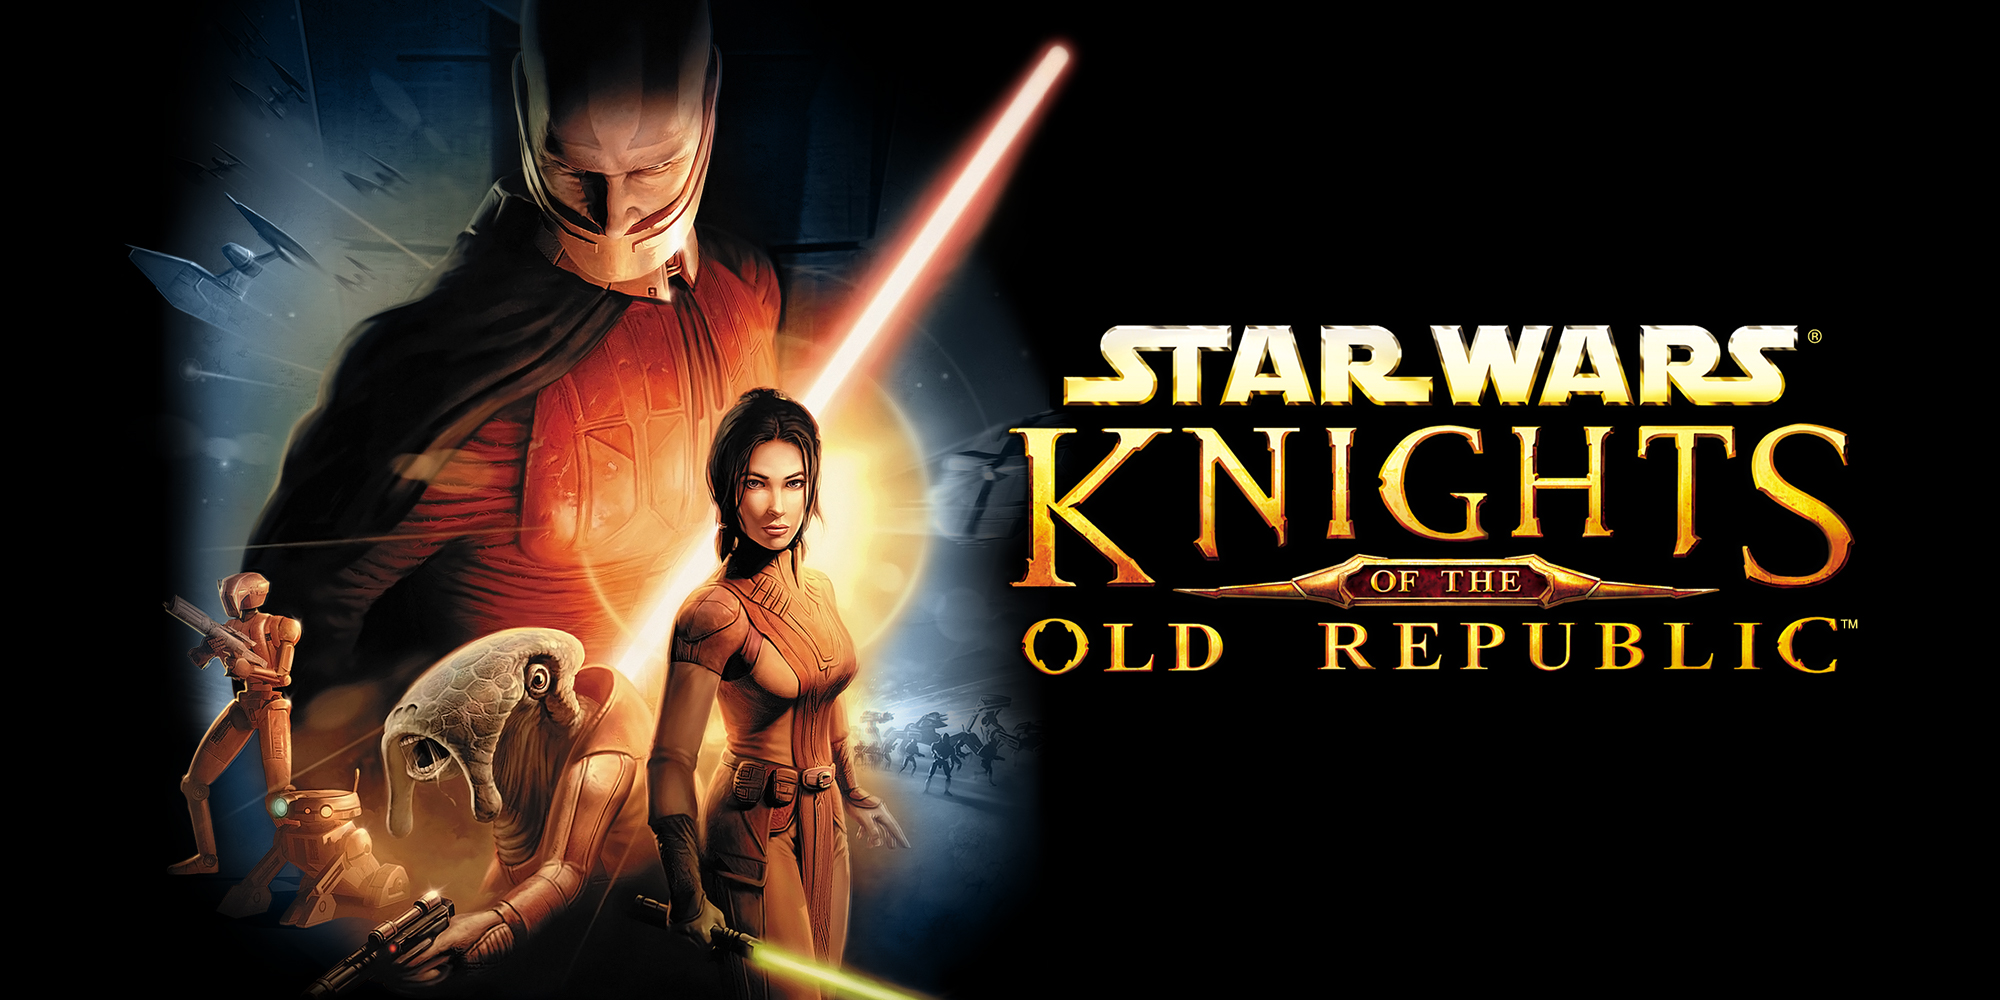 Star Wars : Knight of the old Republic, ou comment créer un scénario prodigieux.